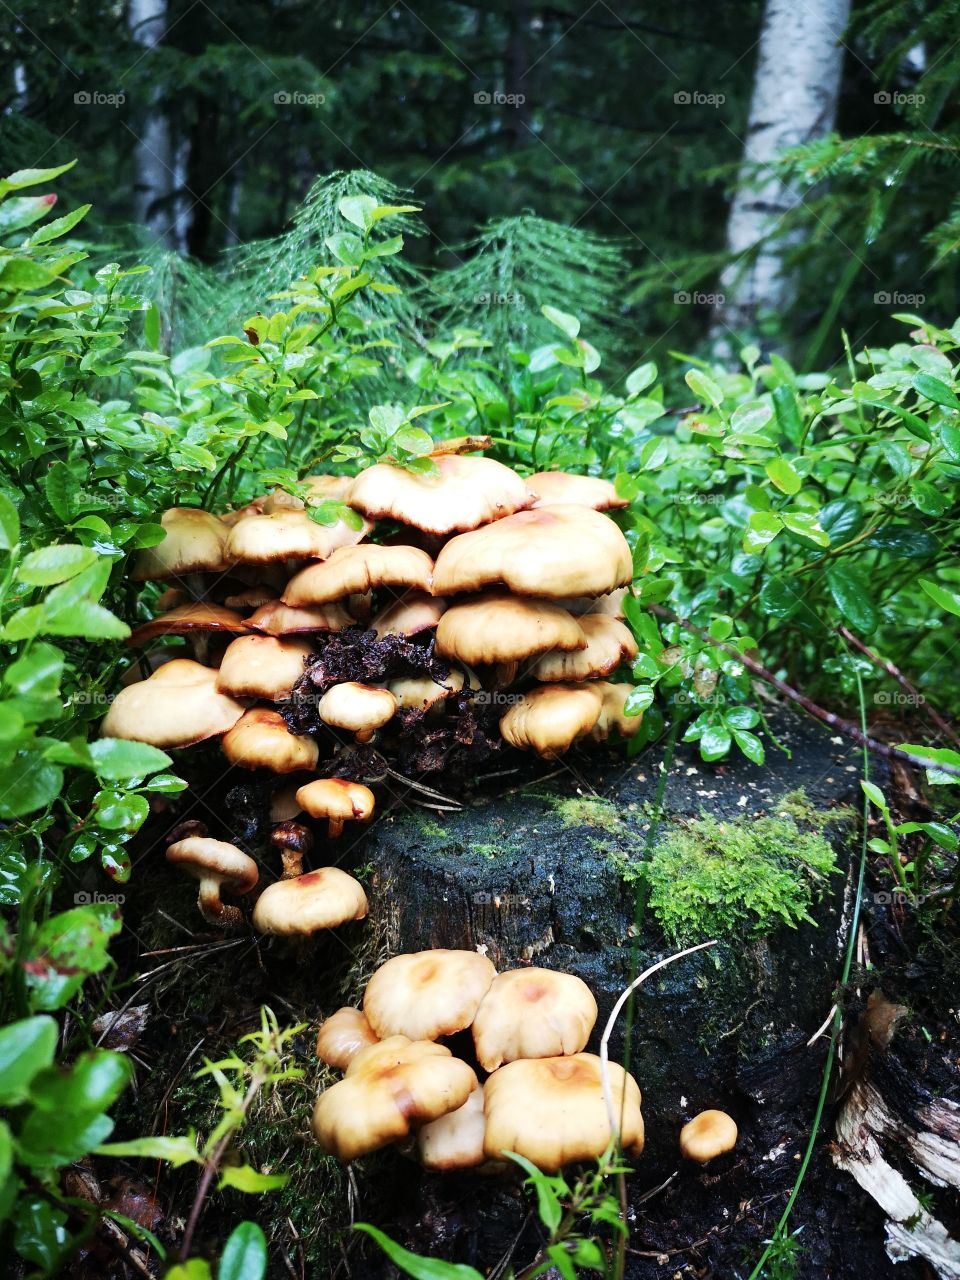 Mushrooms in the woods1